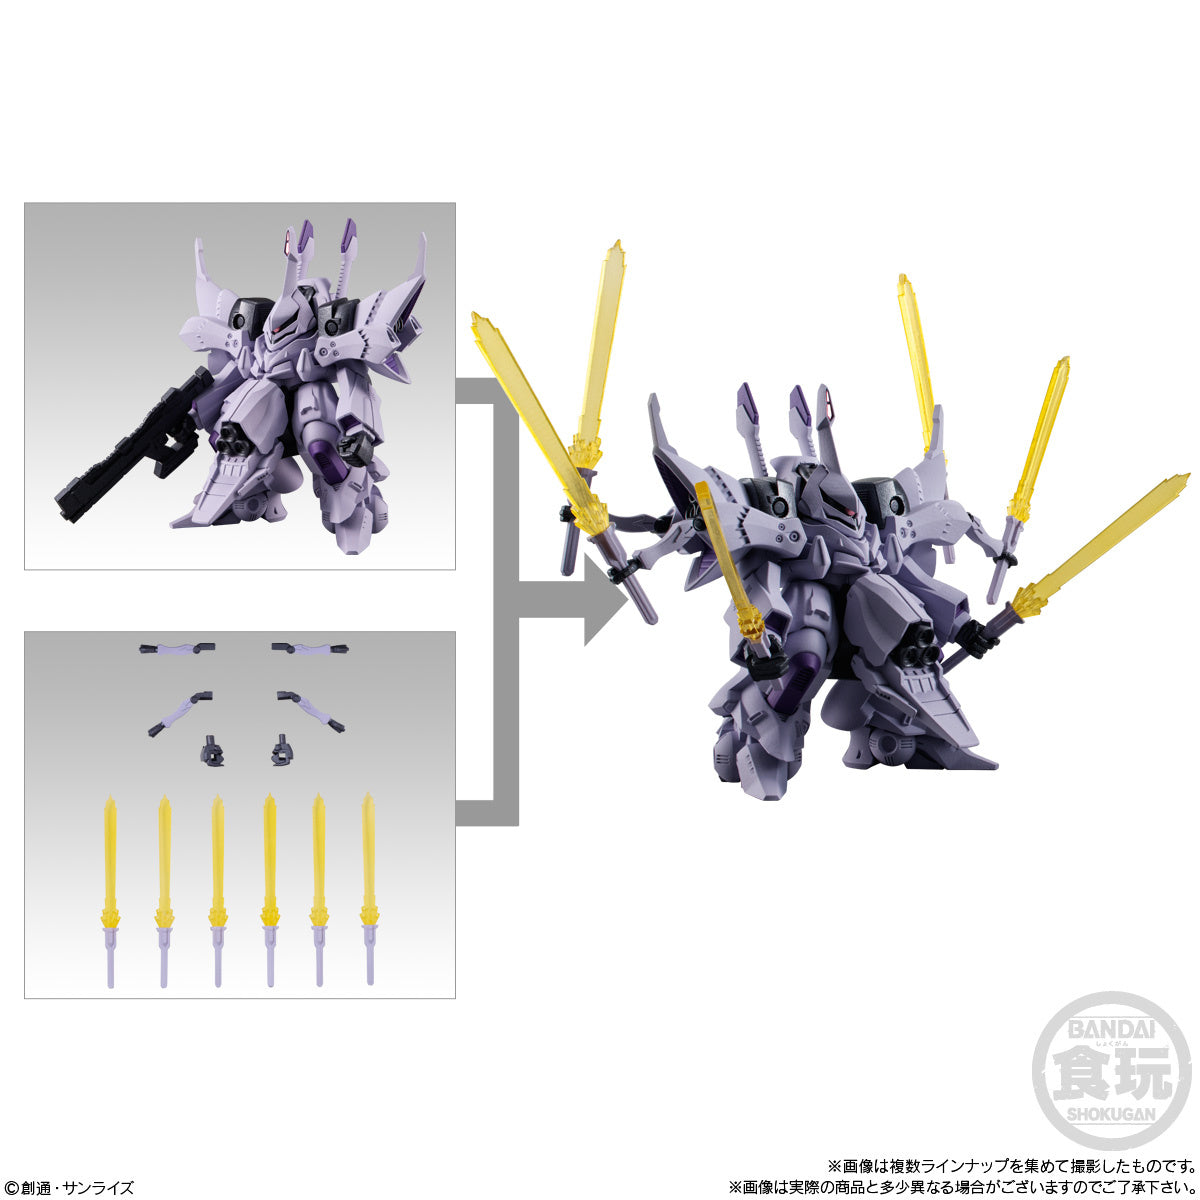 Bandai - Shokugan - Mobile Suit Gundam - FW Gundam Converge 